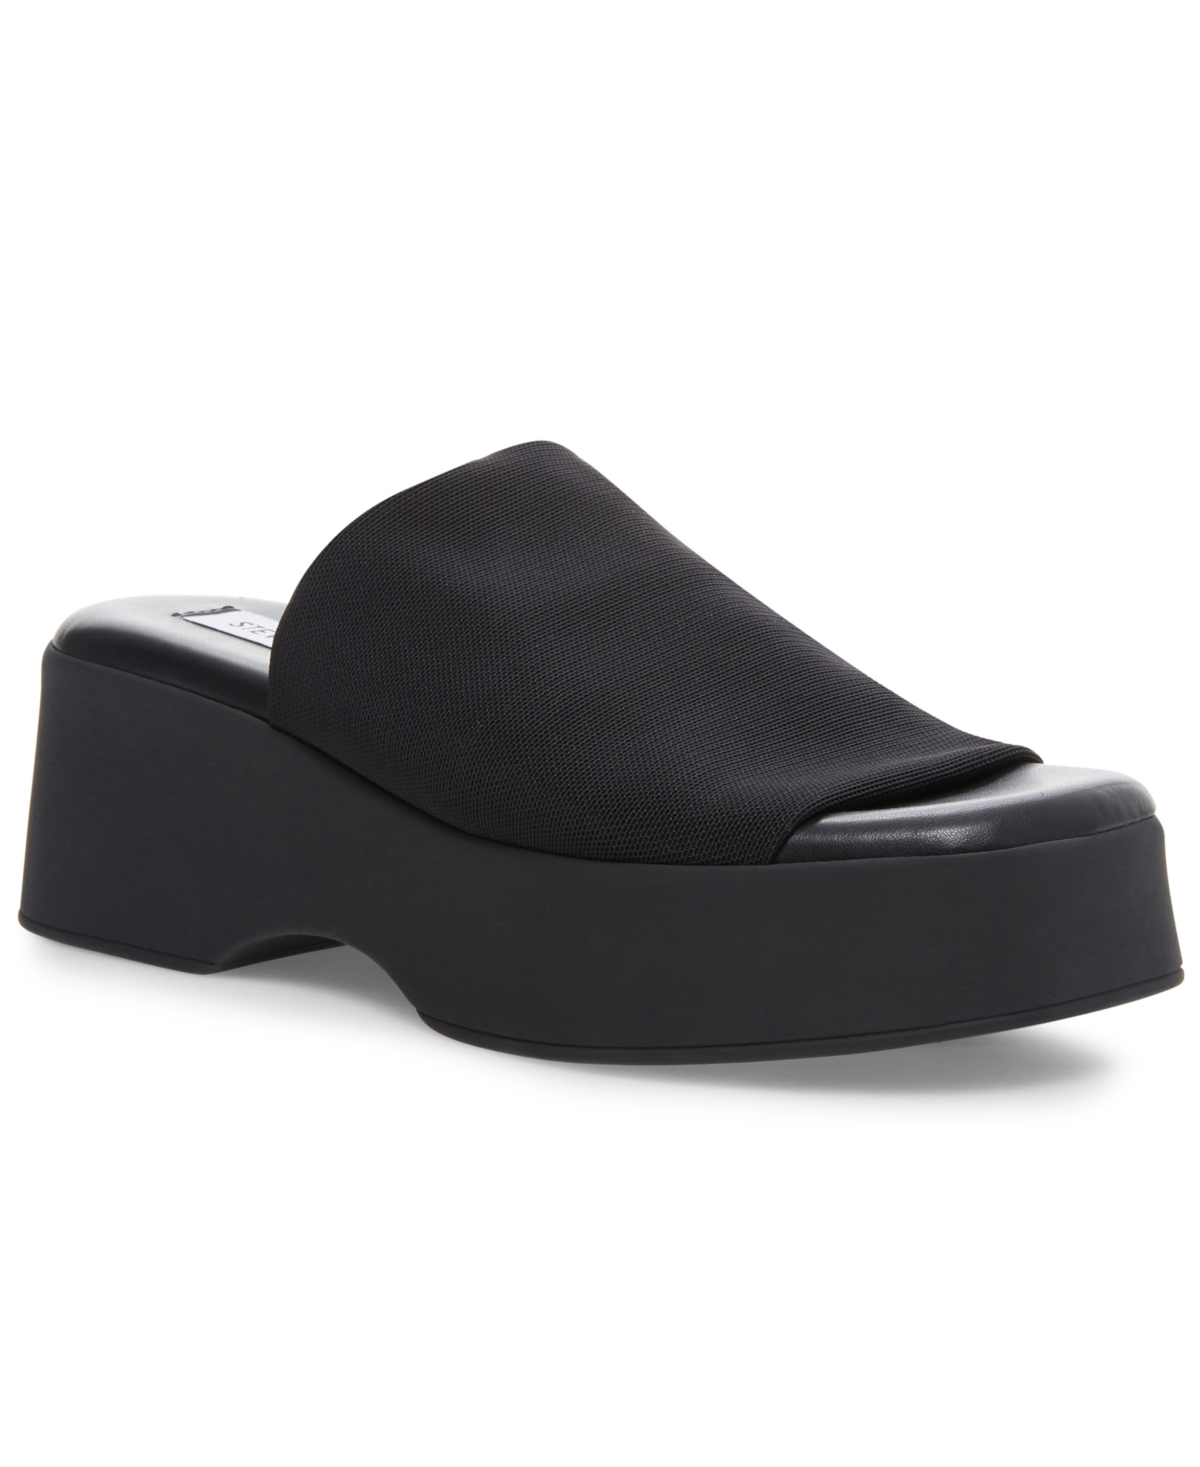 Women's Slinky30 Flatform Wedge Sandals - Black